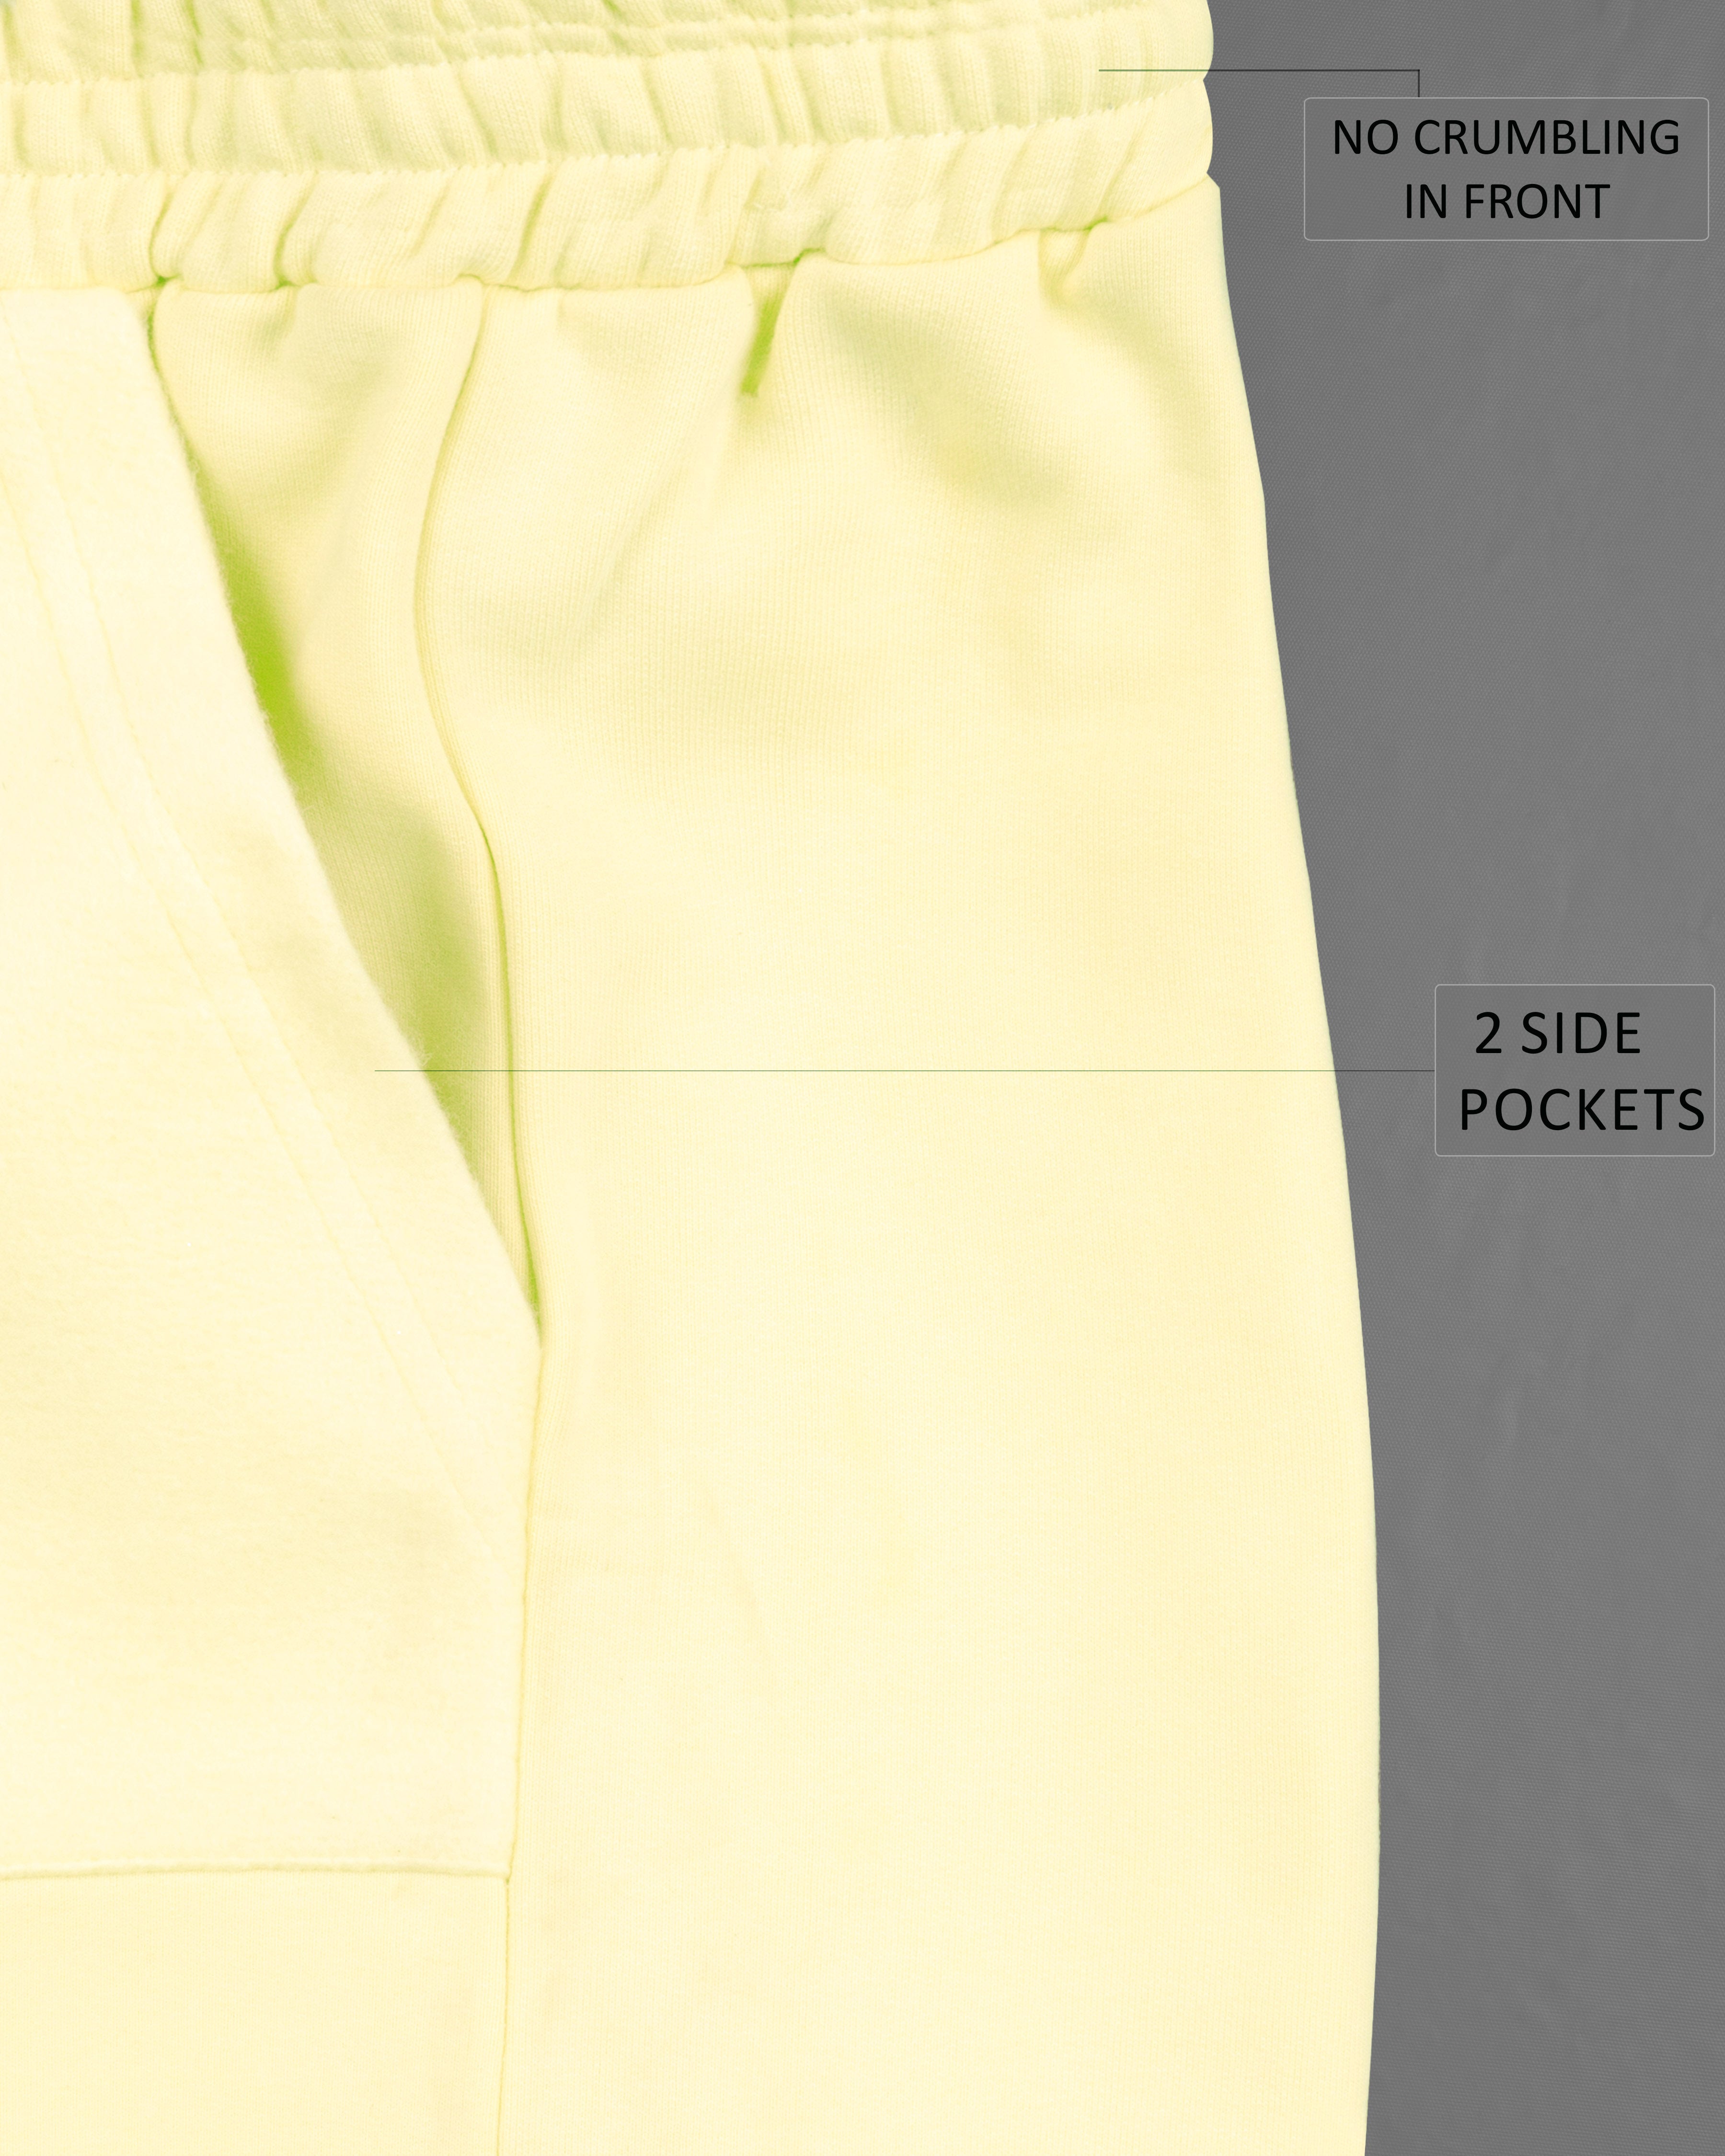 Beeswax Yellow Premium Cotton Bomber Jacket with Shorts Combo TS629-SR172-38, TS629-SR172-39, TS629-SR172-40, TS629-SR172-42, TS629-SR172-44, TS629-SR172-46